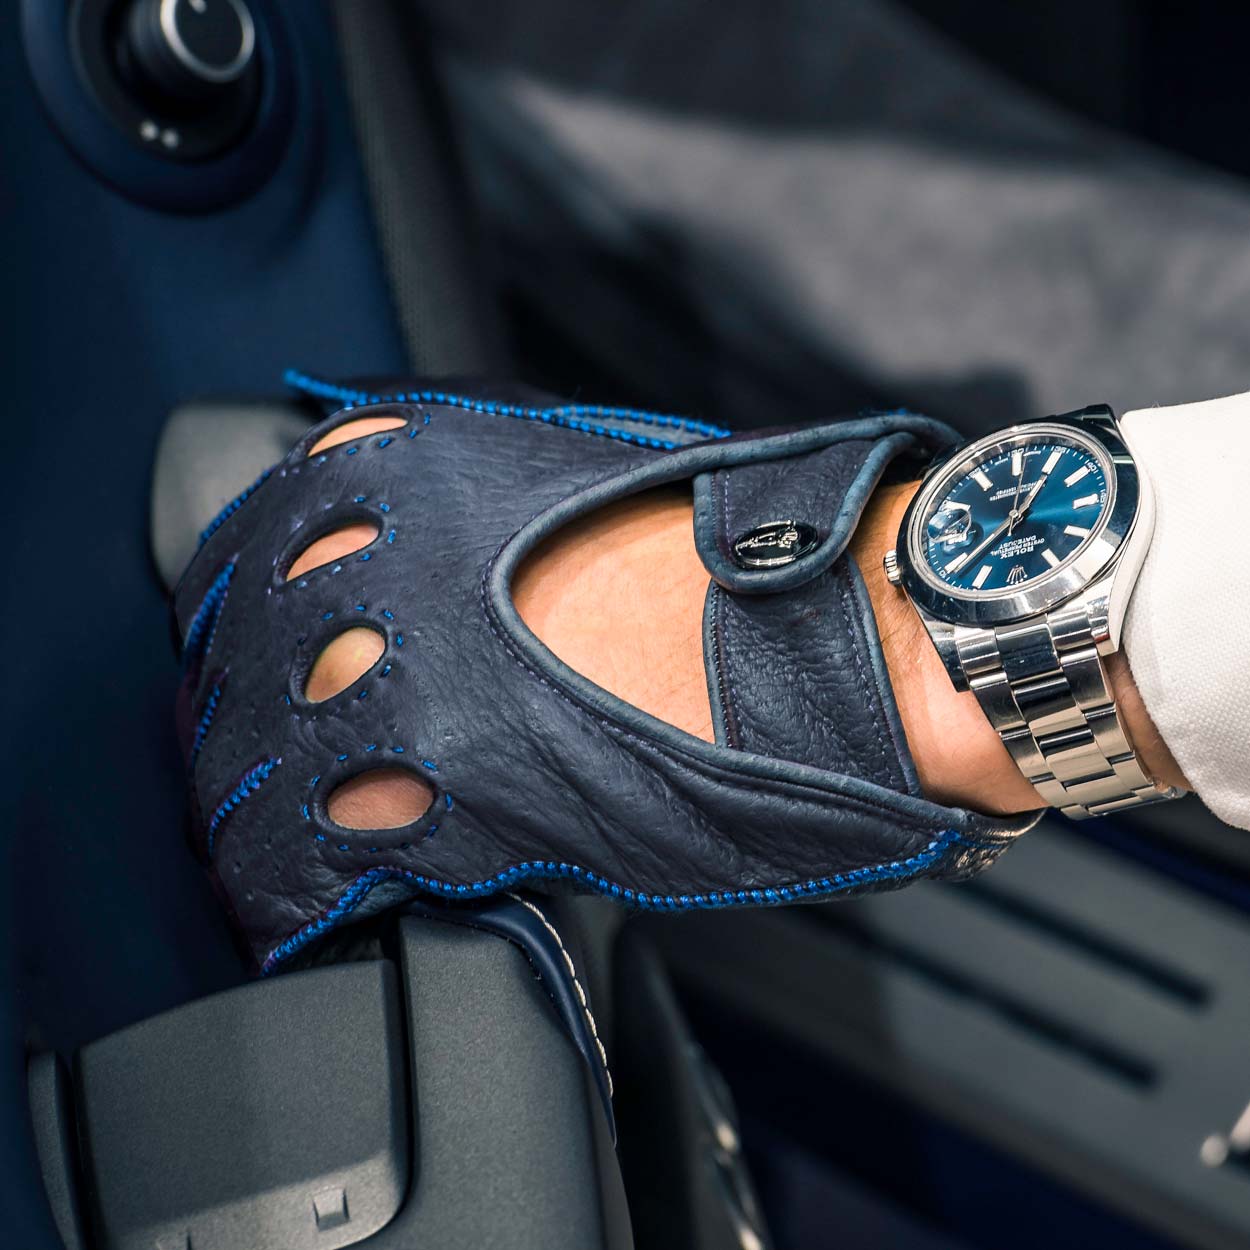 Blue grey leather men's italian driving gloves